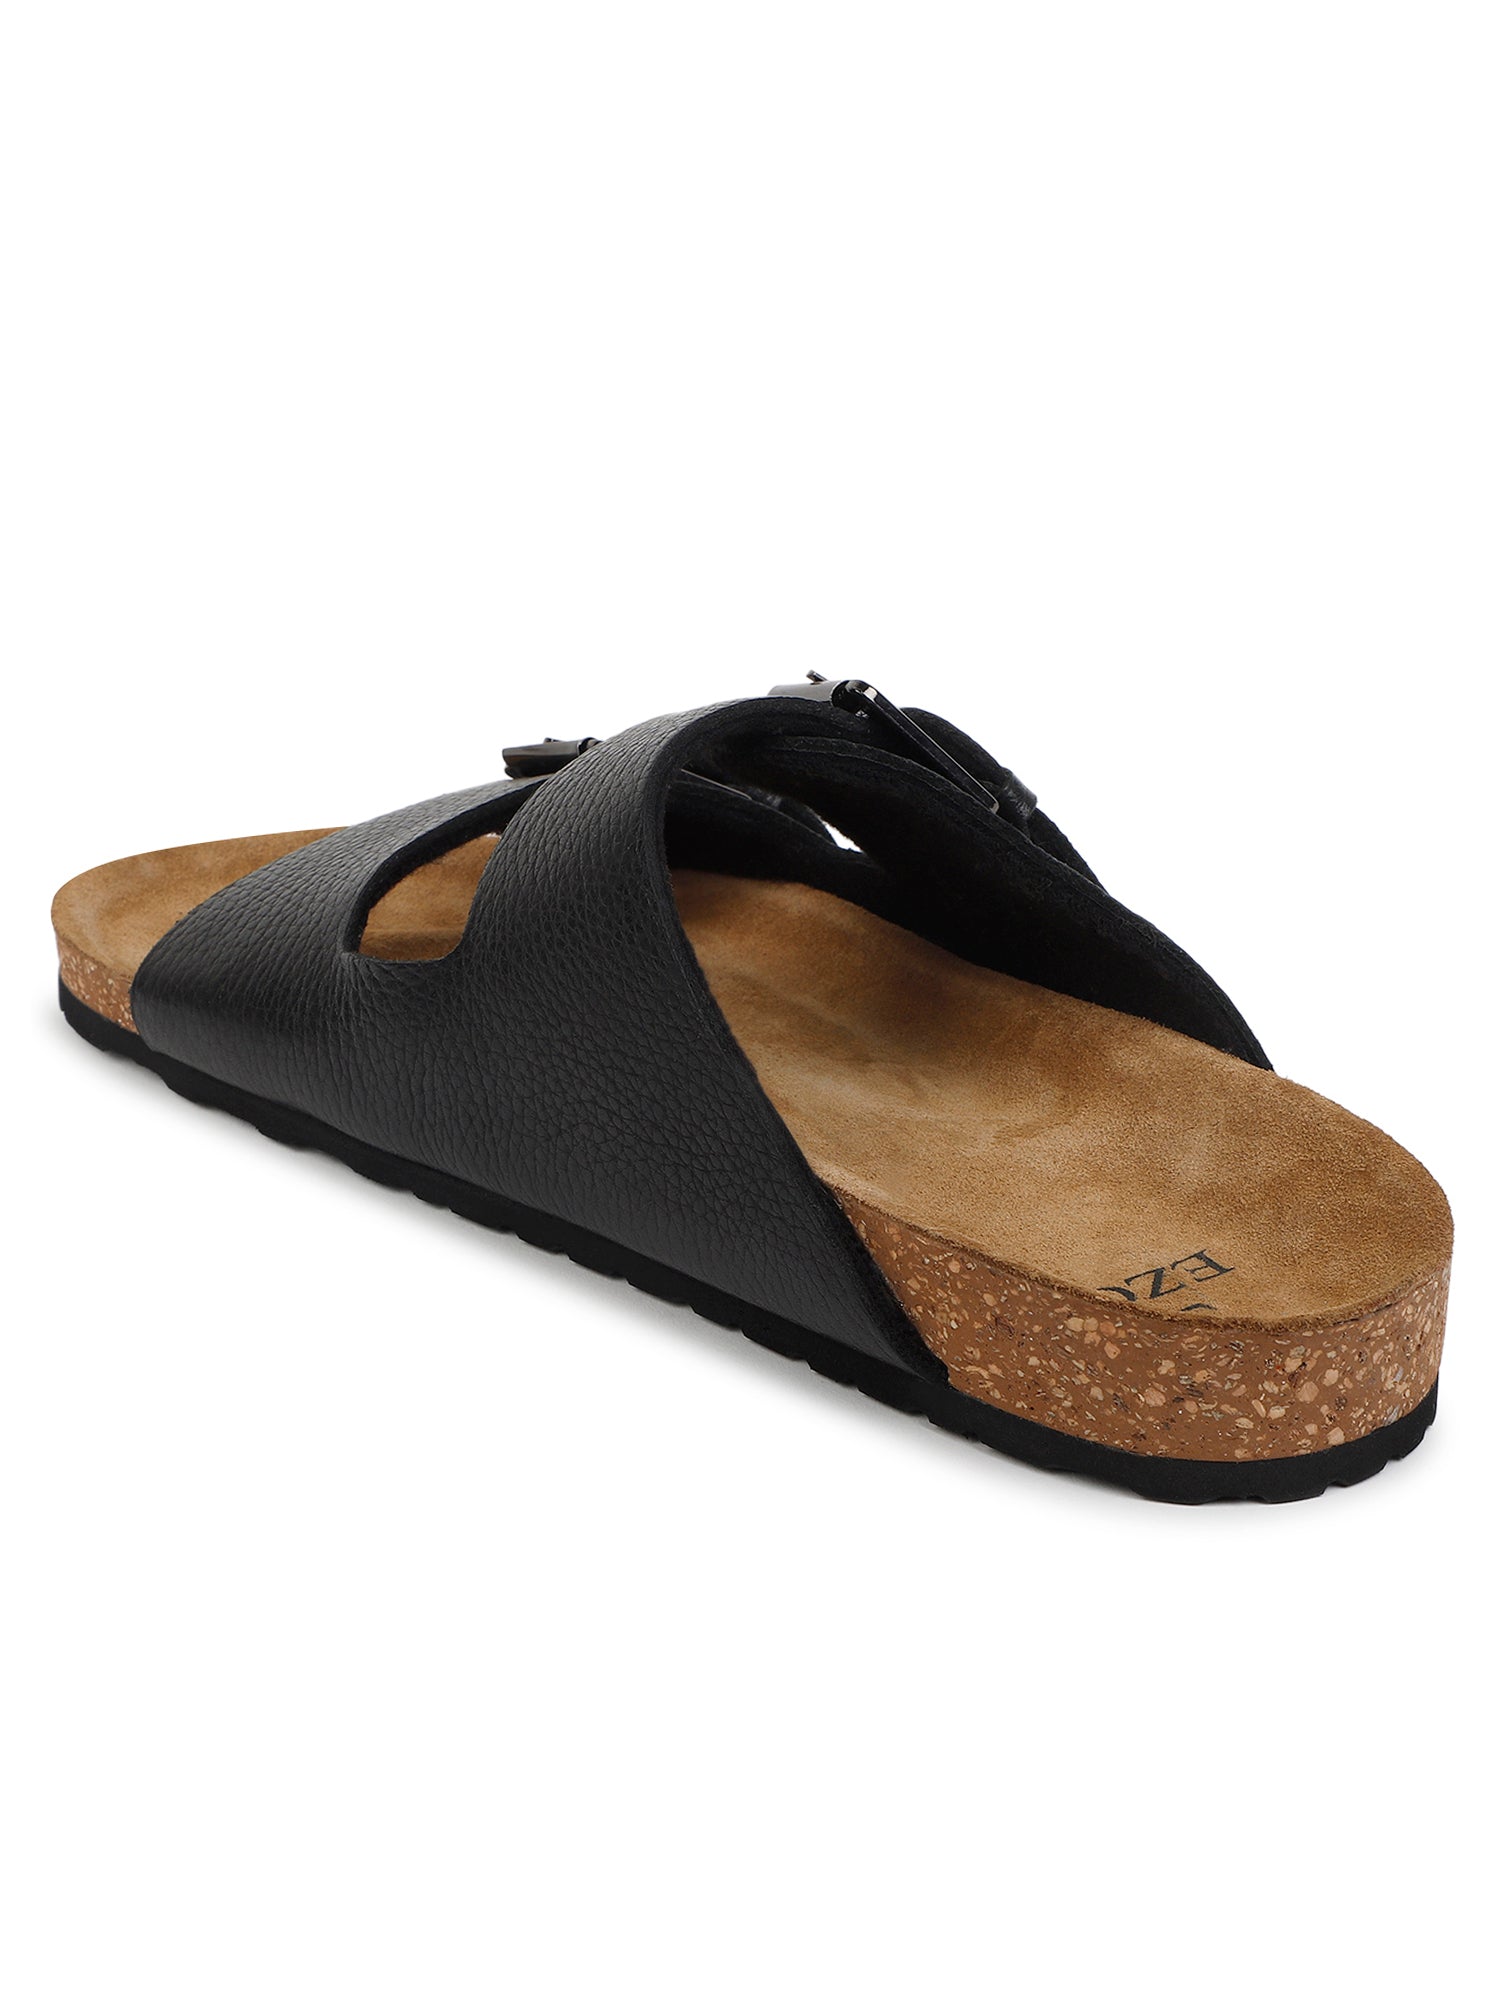 Leather sandal for men (black)